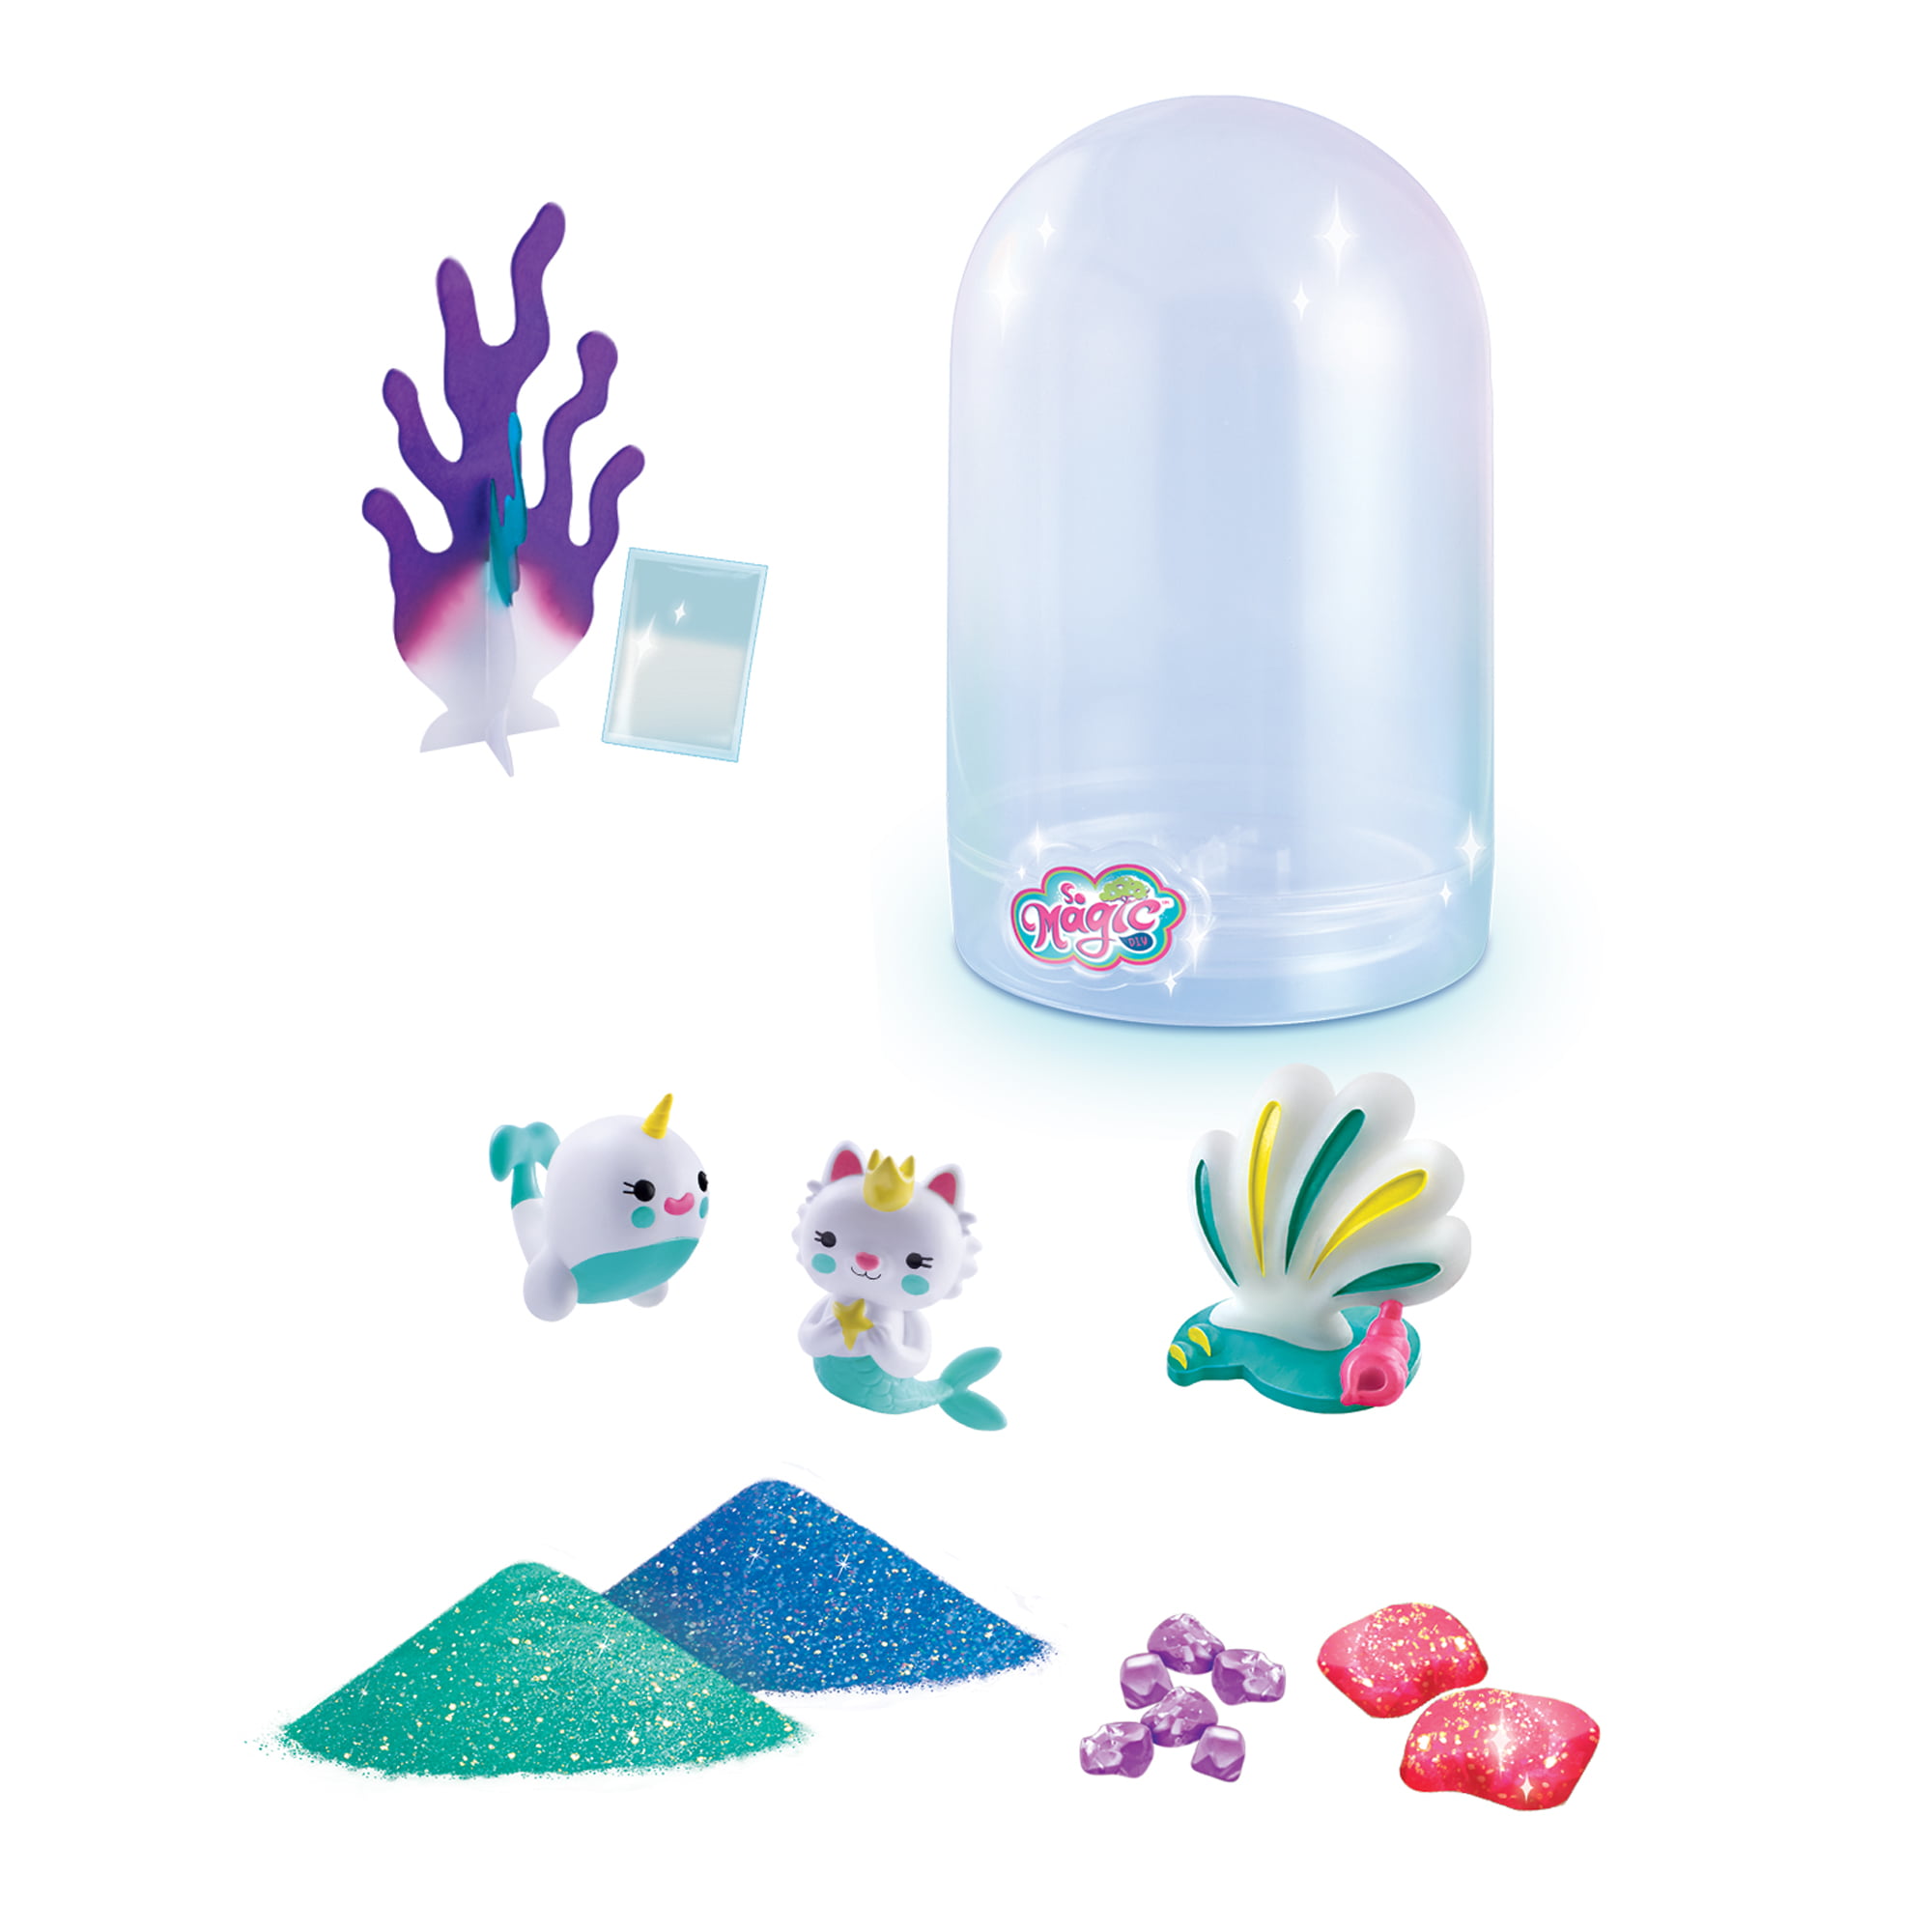 Canal Toys - So Magic DIY - Medium Magic Terrarium Kit - Cosmic Edition